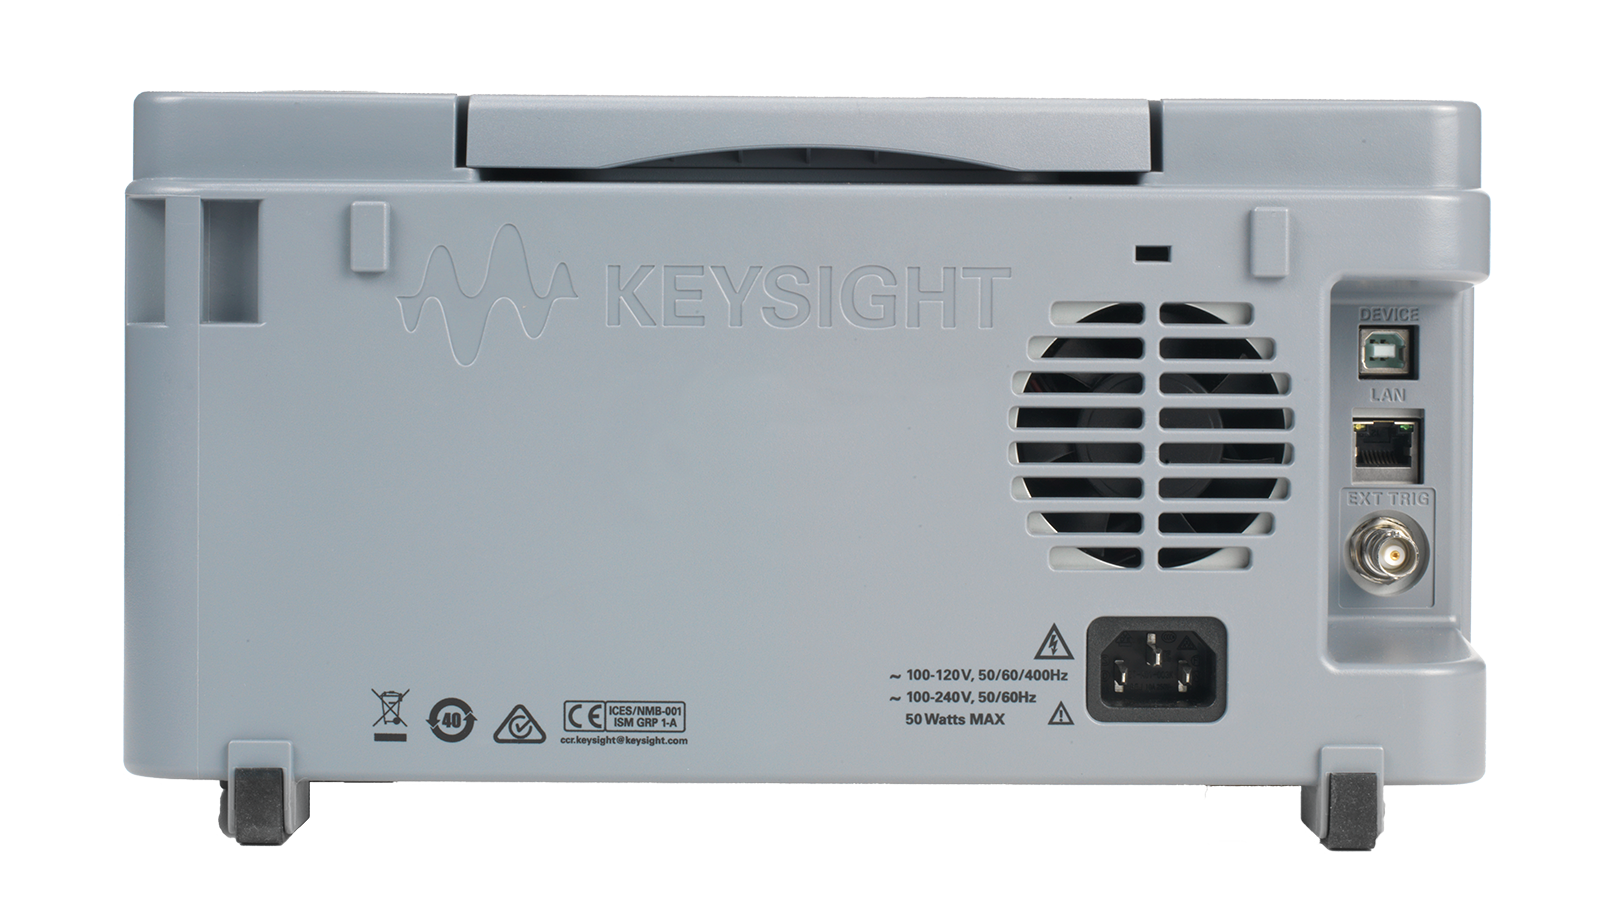 Back side of Keysight InfiniiVision 1000 X-Series Oscilloscope